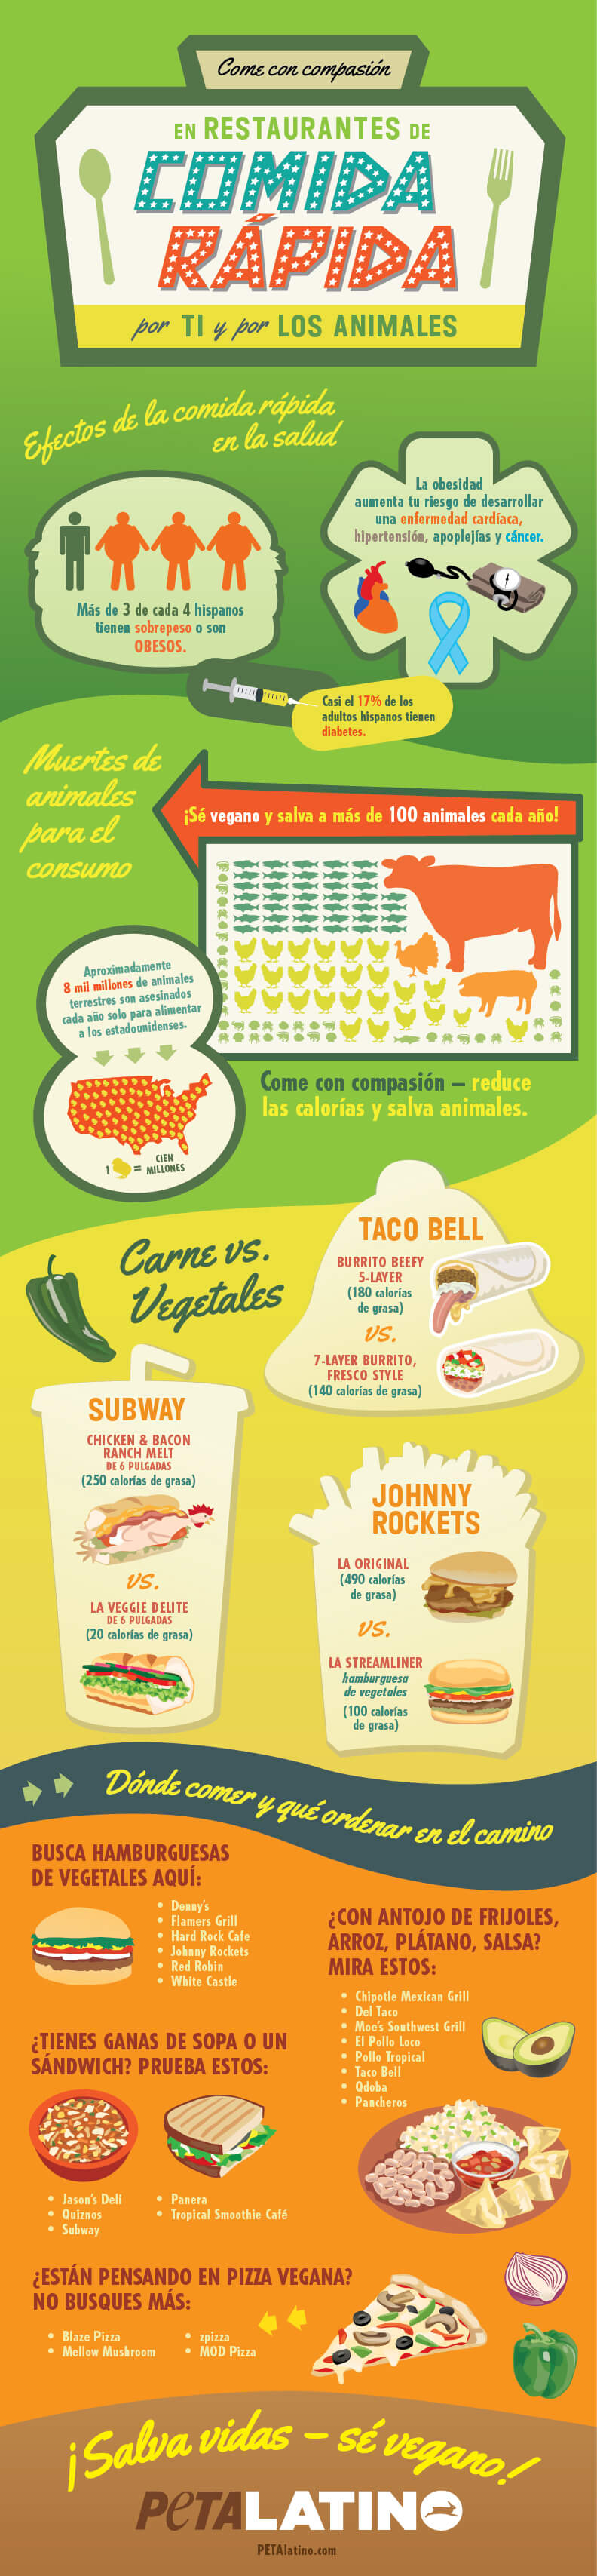 infographic-petalatino-fastfood-final